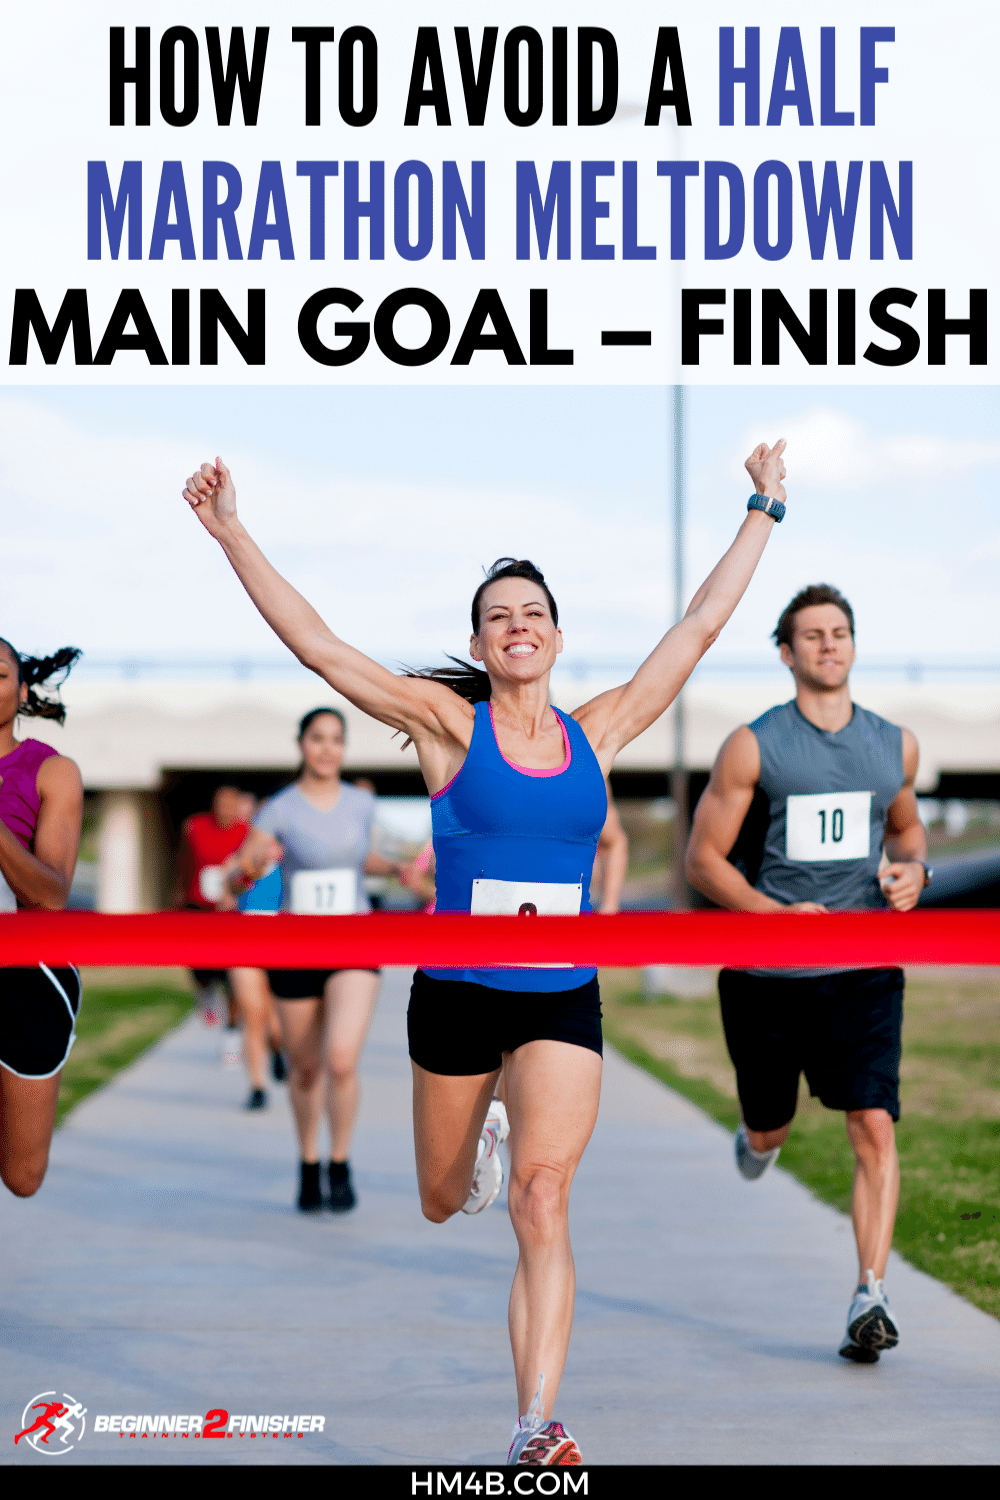 How to Avoid a Half Marathon Meltdown - Main Goal - Finish